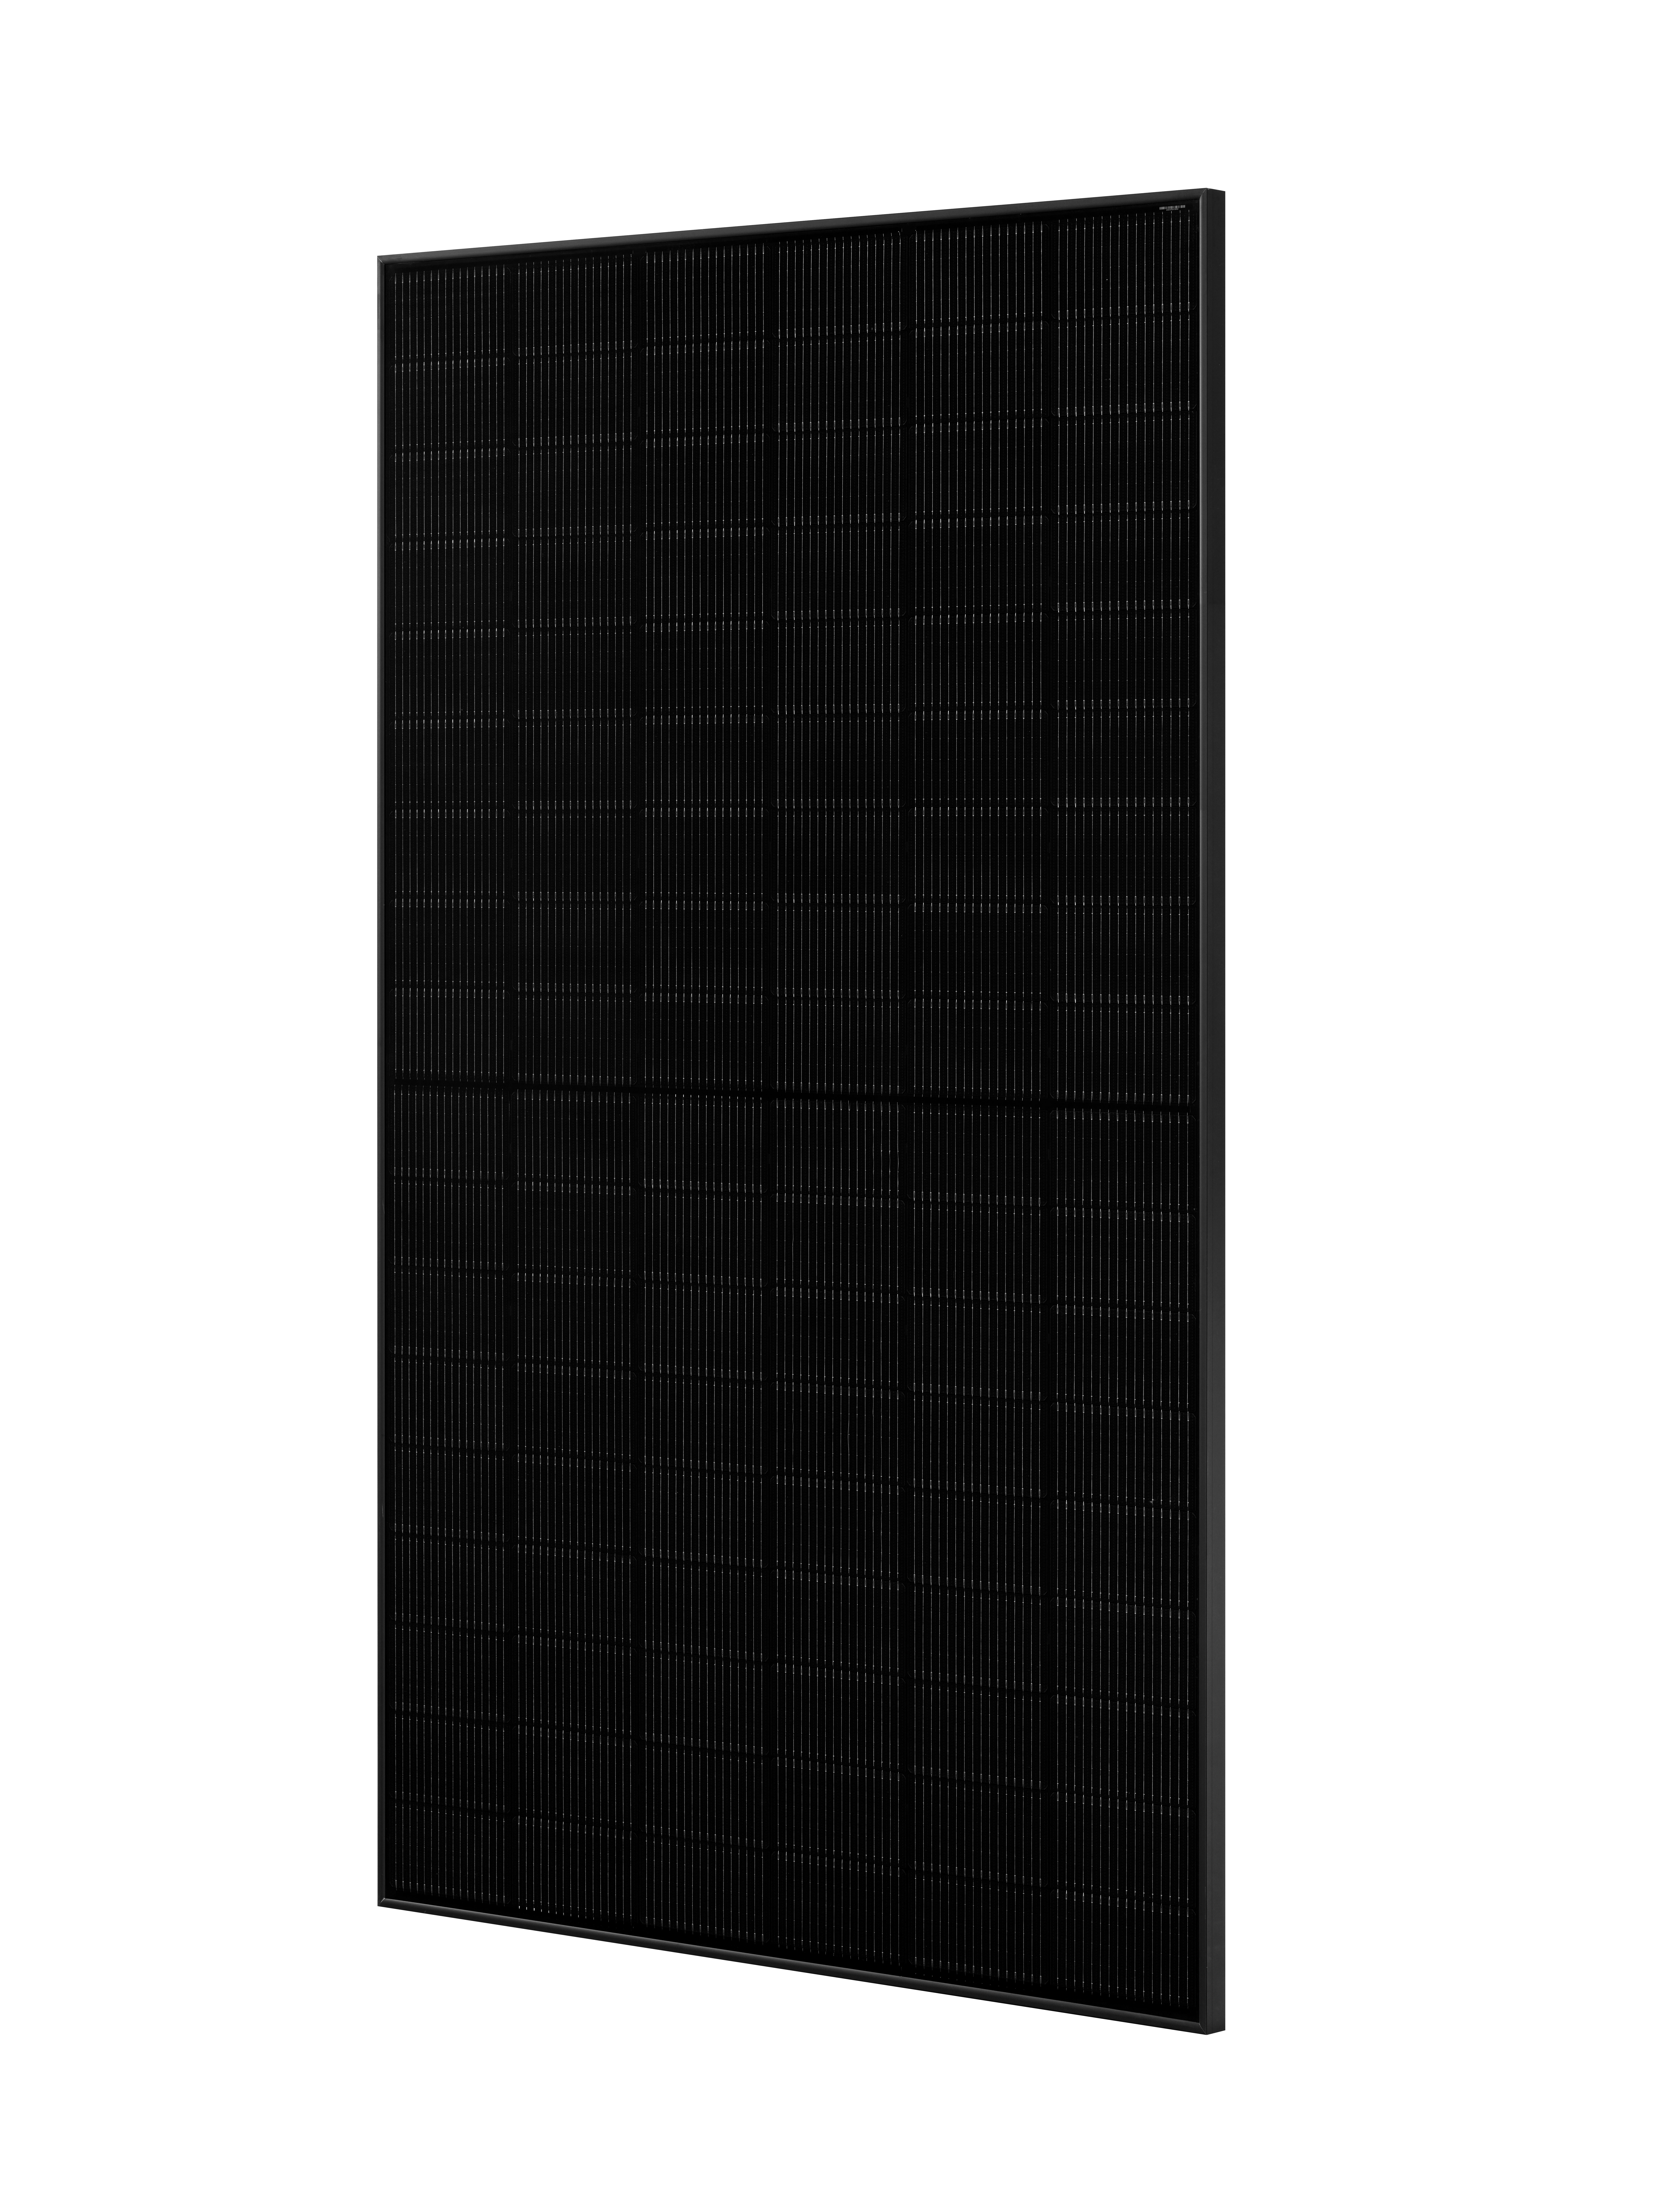 1290Wp Balkonkraftwerk mit Speicher Zendure AIO - Ja Solar 430Wp bifazial full Black